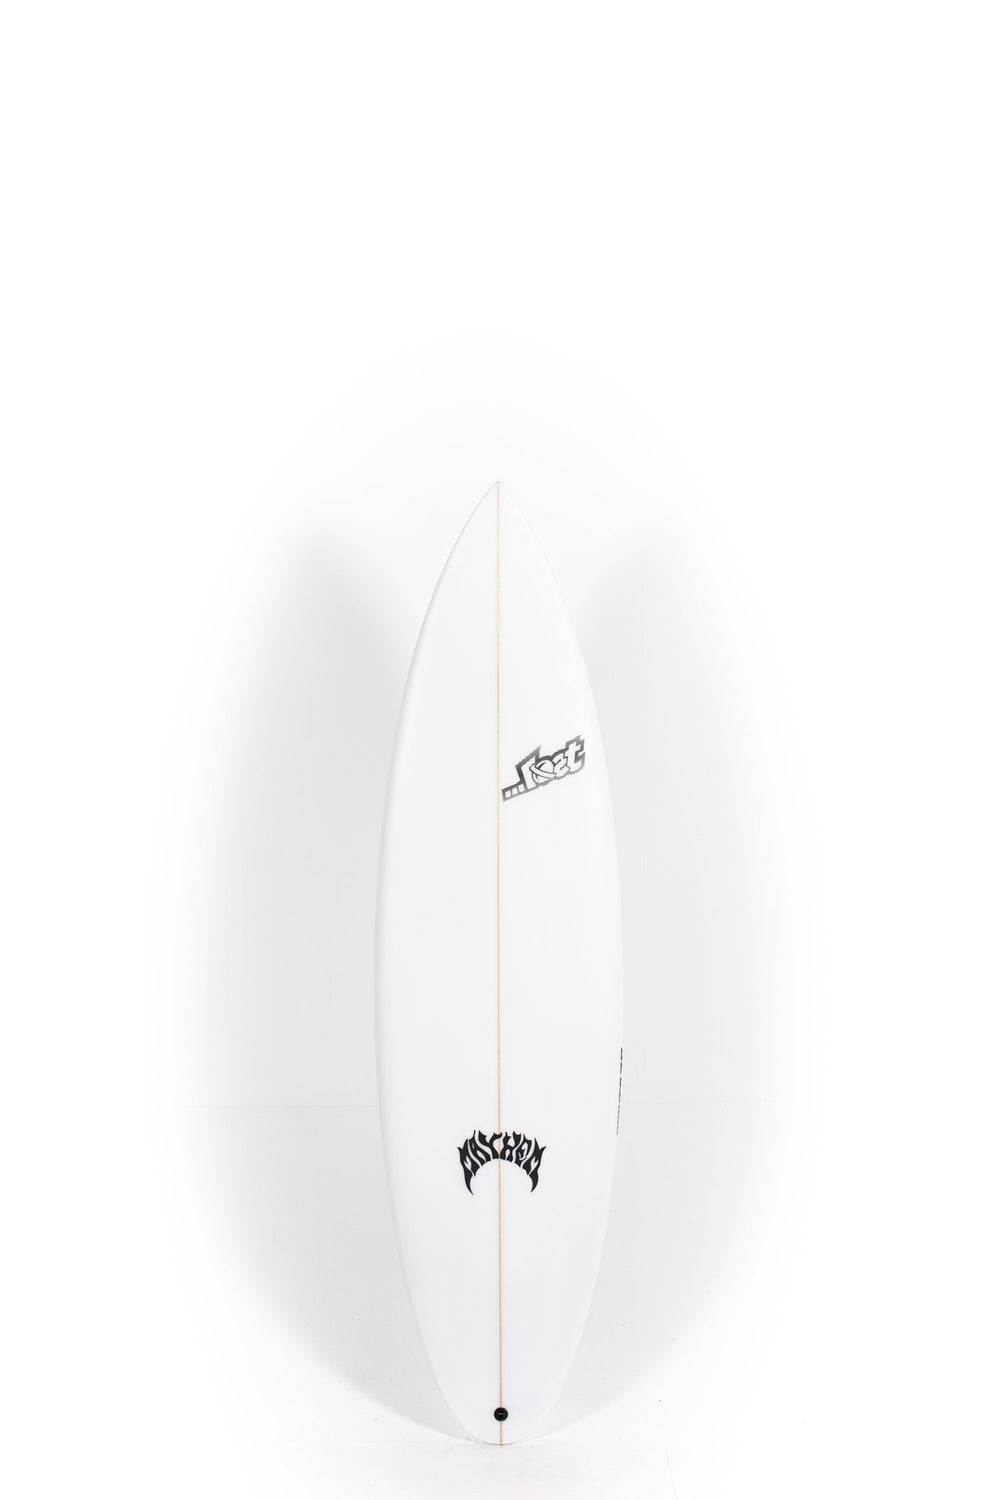 Pukas Surf Shop - Lost Surfboards - DRIVER 3.0 (Round) by Matt Biolos - 6'1